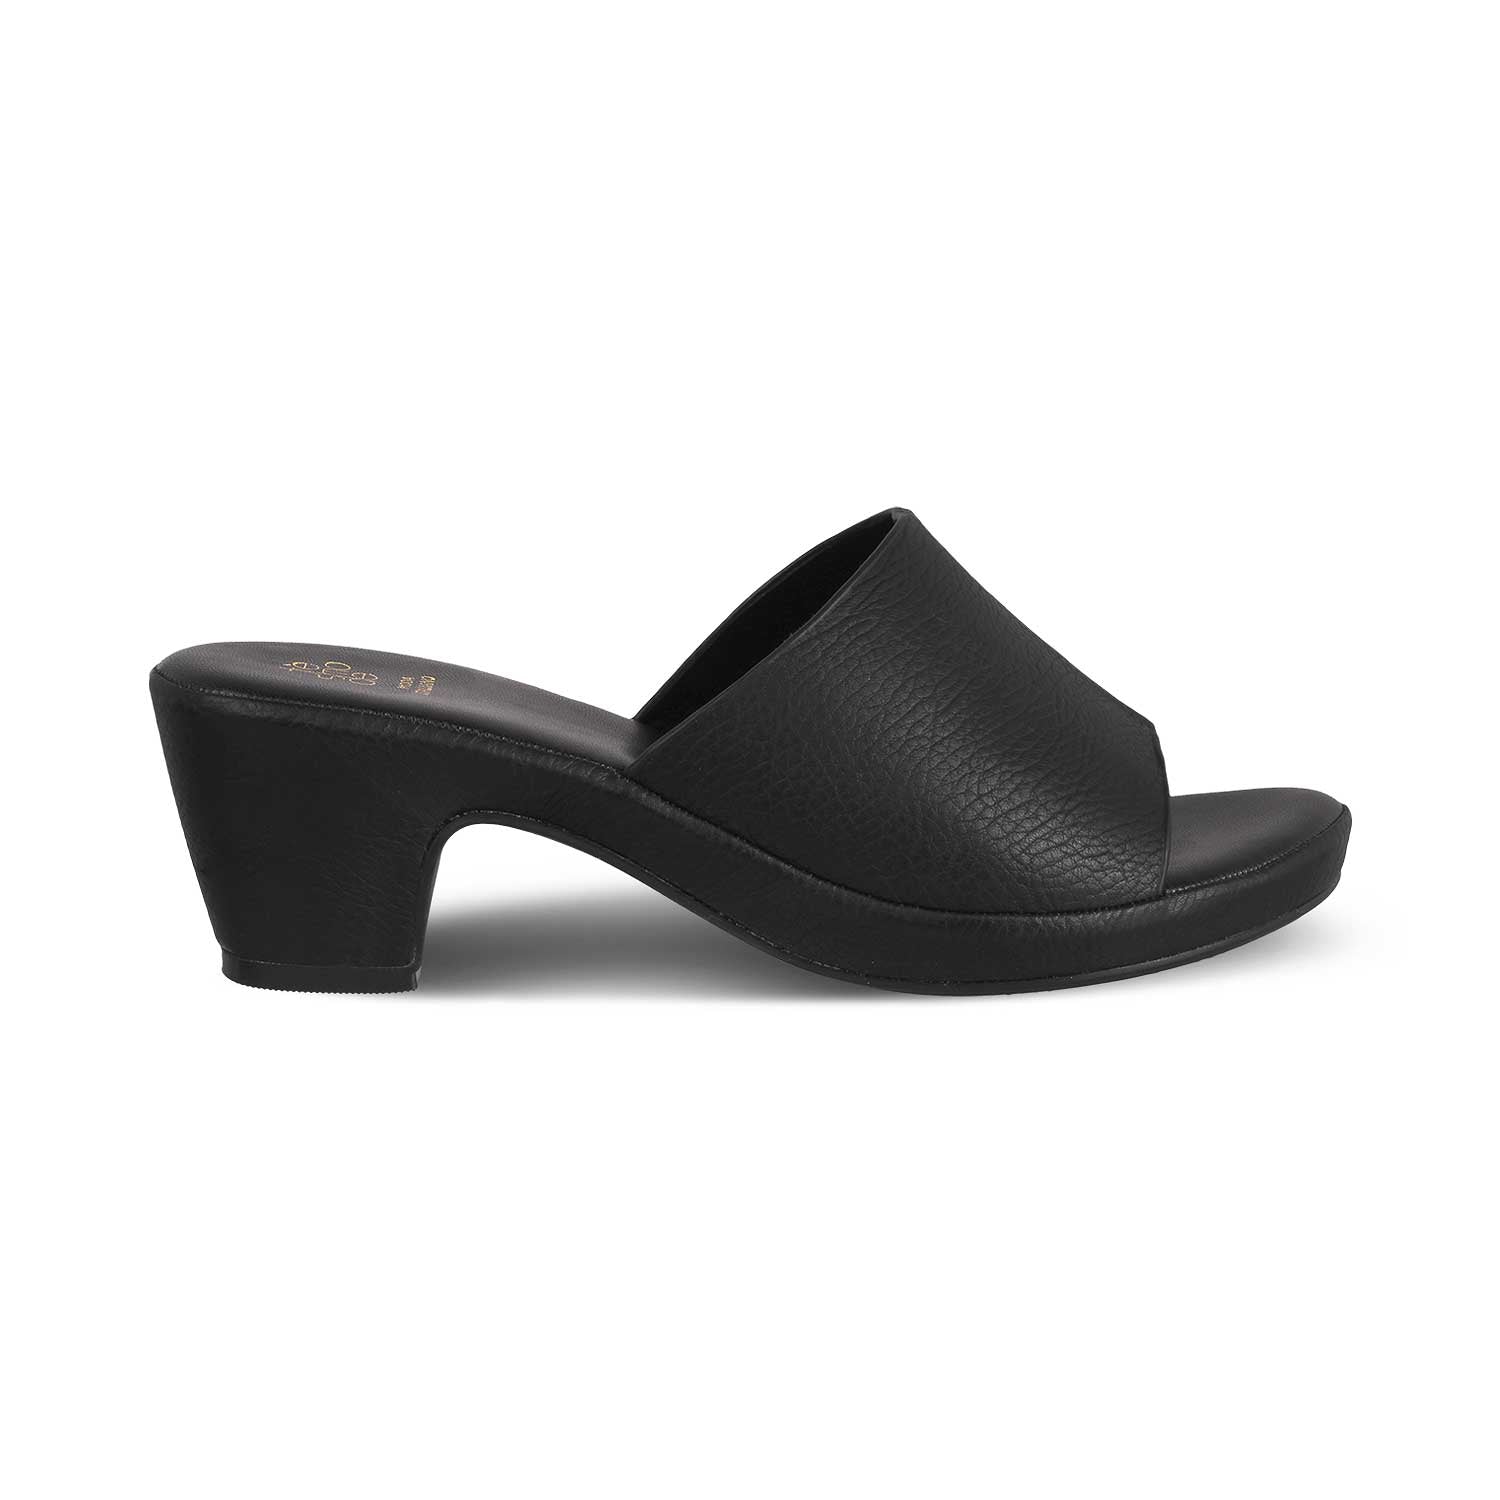 The Brixyed Black Women's Casual Block Heel Sandals Tresmode